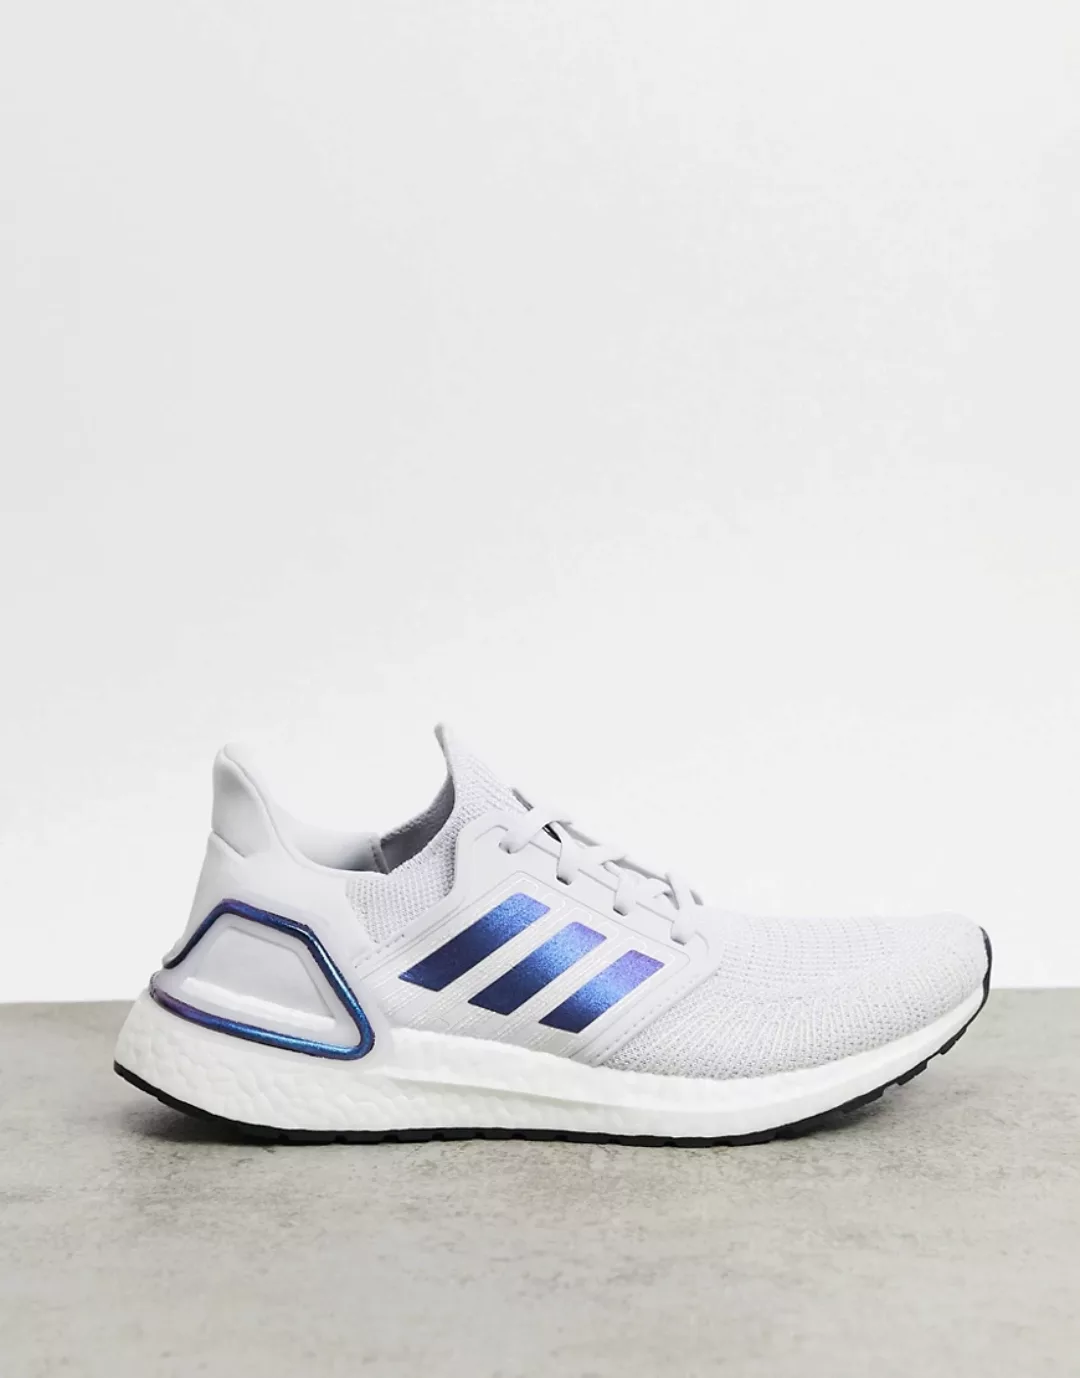 adidas – Ultraboost – Sneaker in Dash-Grau & Boost-Blau-Violett günstig online kaufen